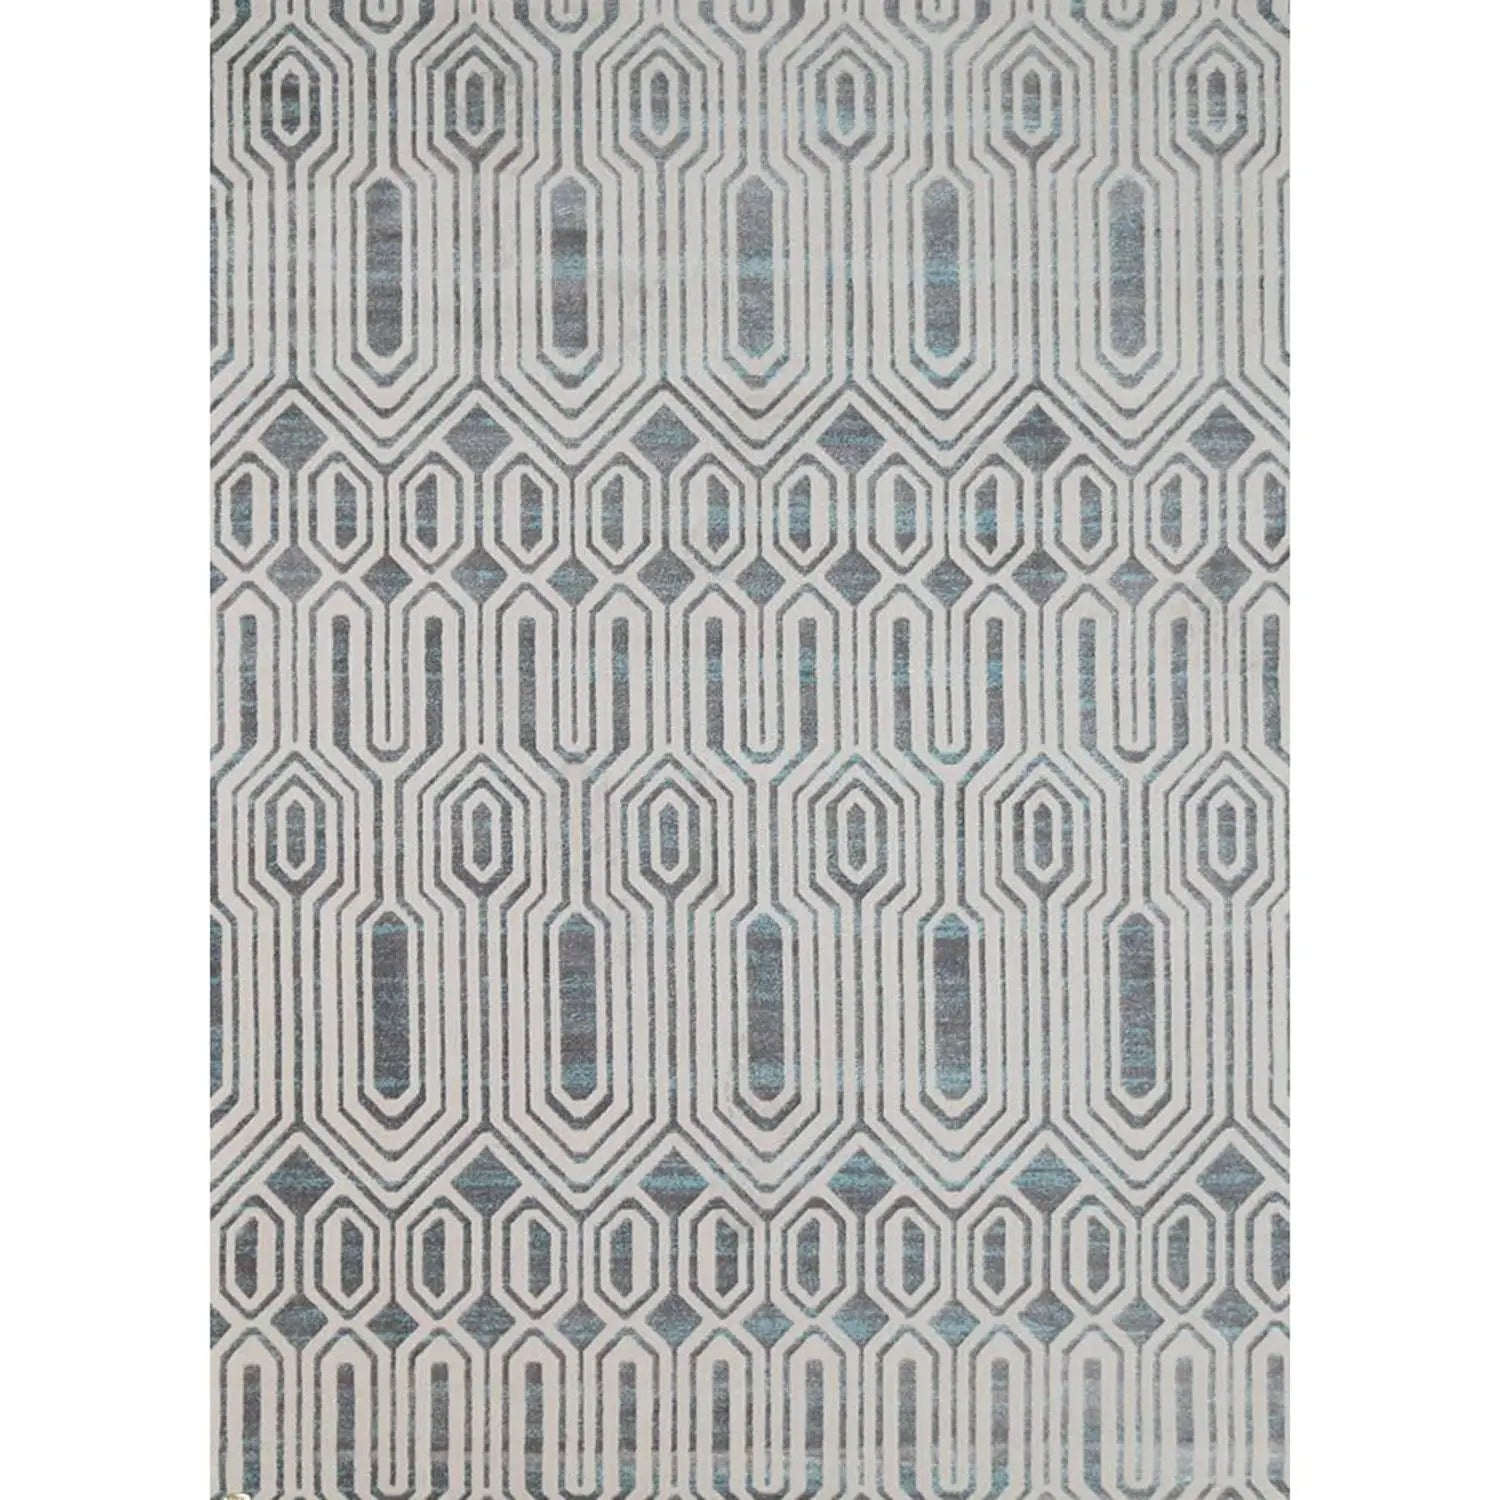 Pierre Cardin Sateen Maze Designer Rug Grey/Blue - Rugs - Rugs a Million